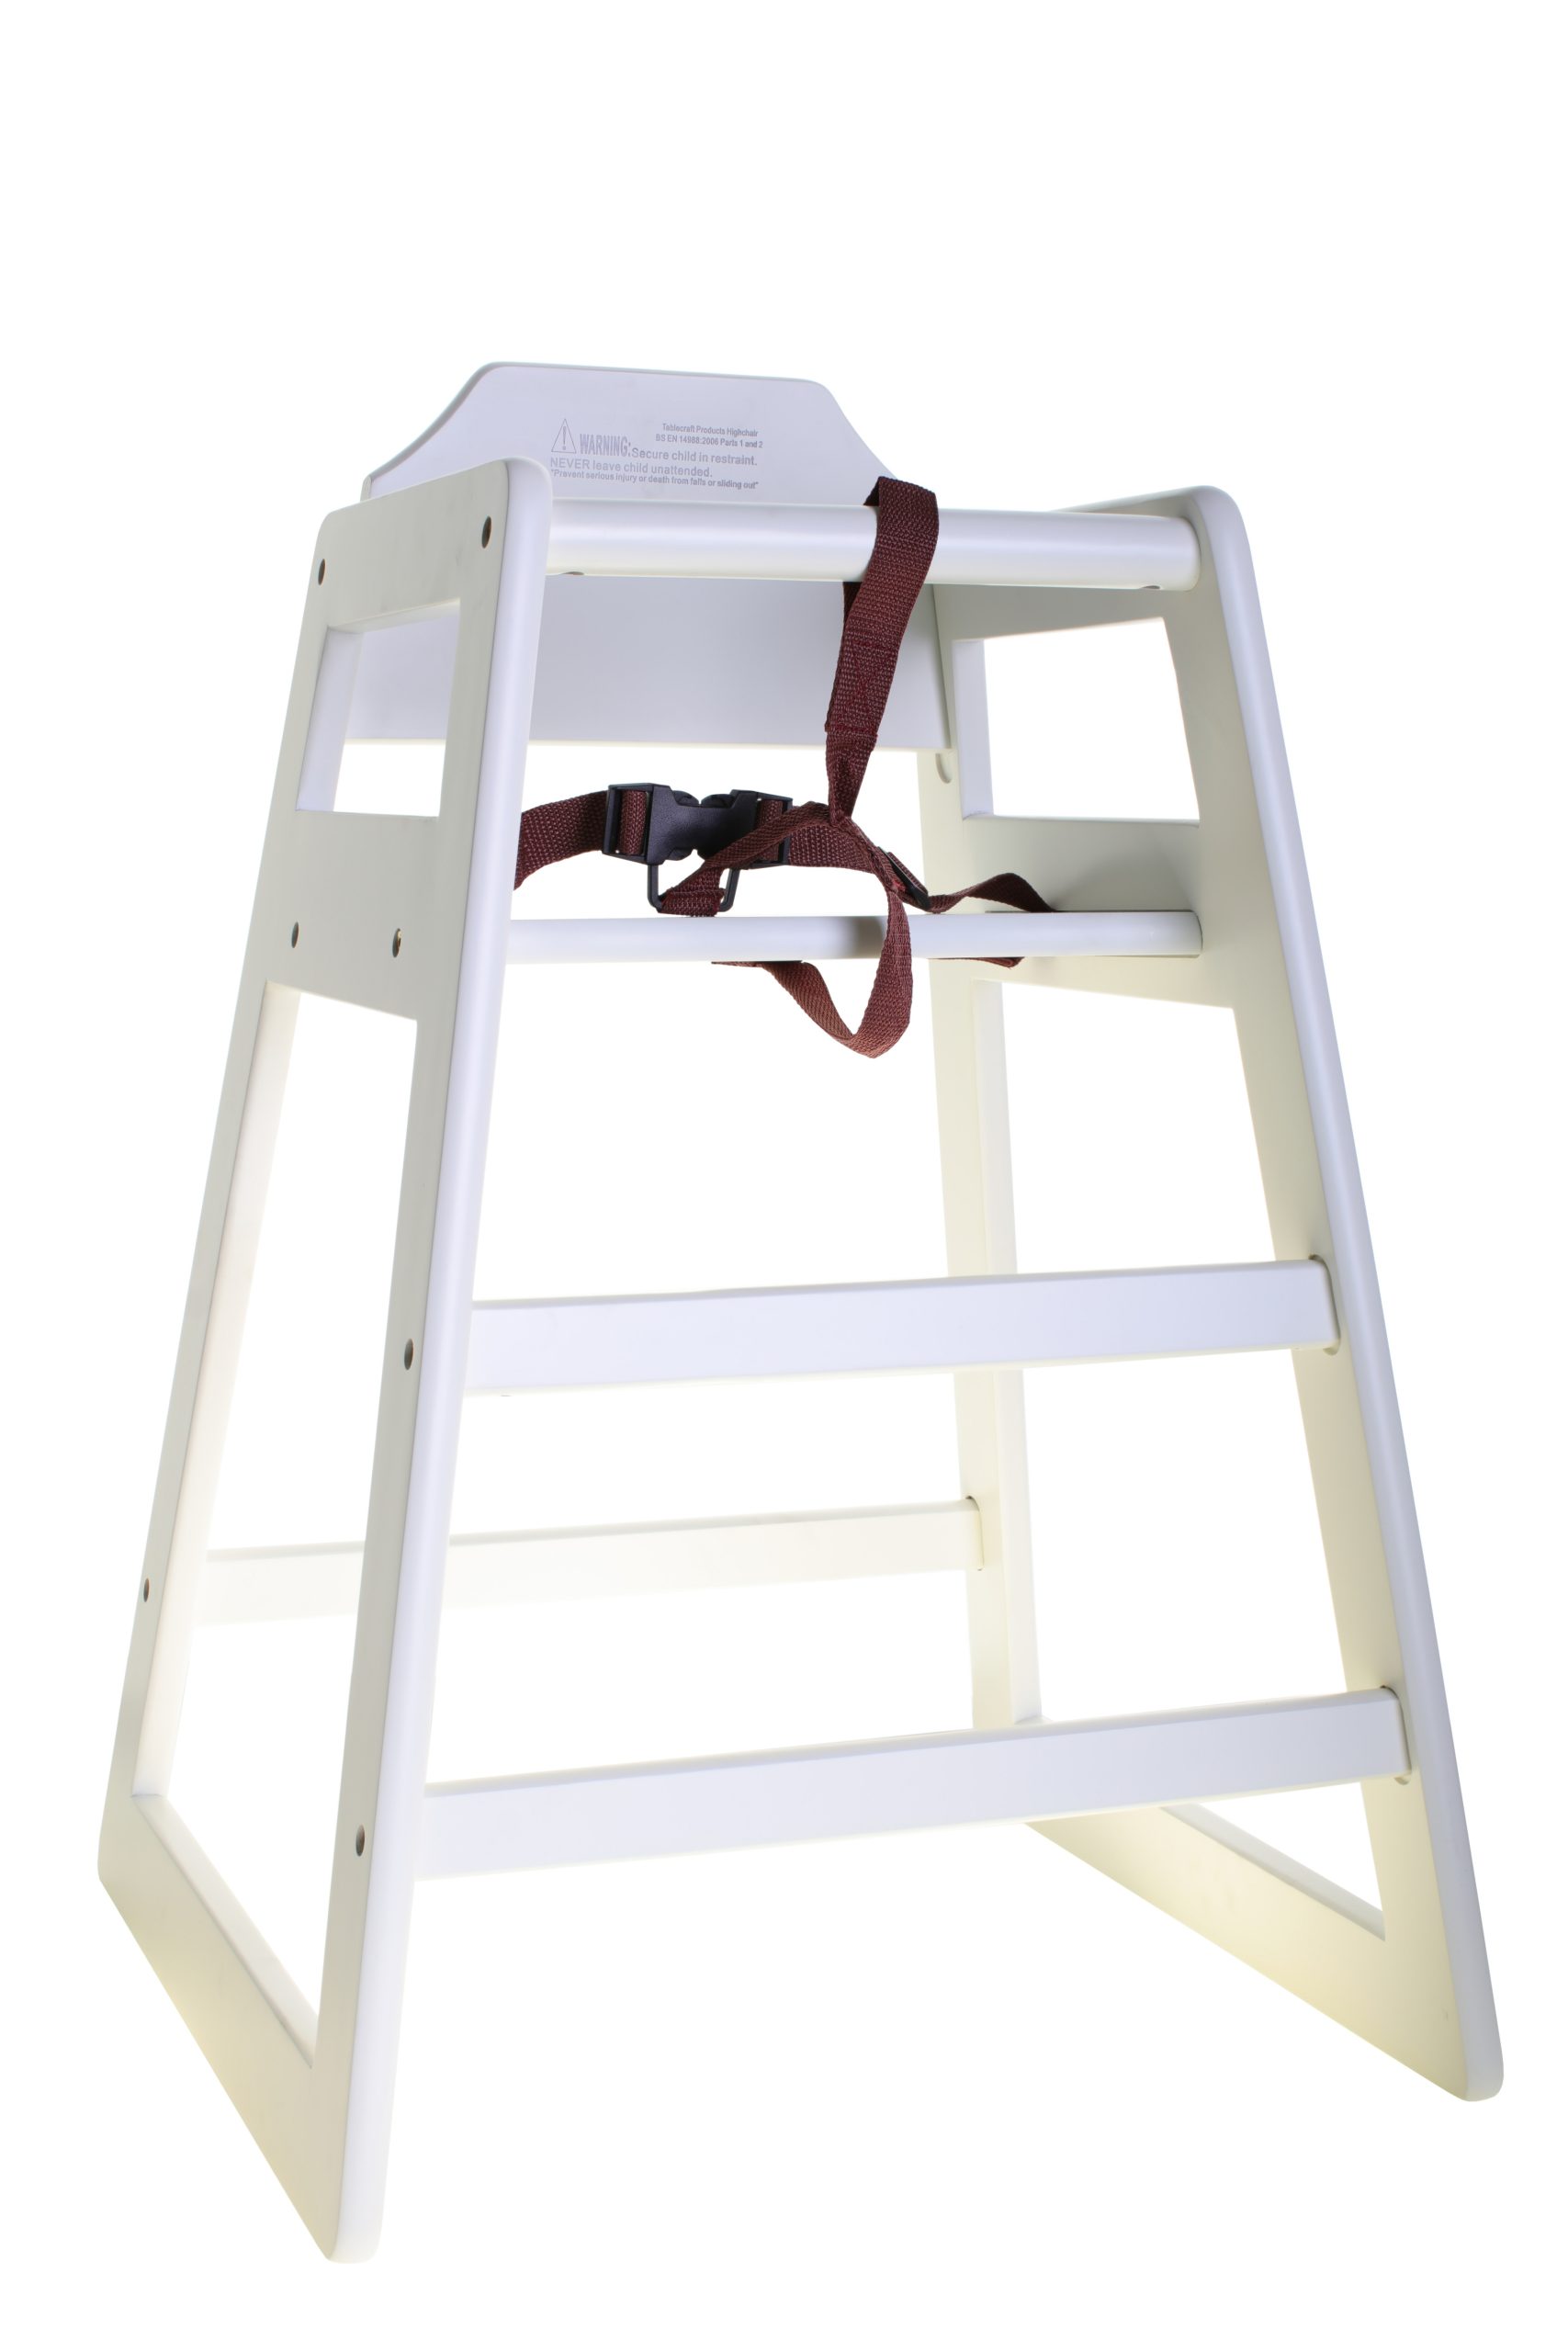 63EU ΠΑΙΔΙΚΟ ΚΑΡΕΚΛΑΚΙ ΦΑΓΗΤΟΥ ΛΕΥΚΟ (επαγγελματικής χρήσης)  High Chair